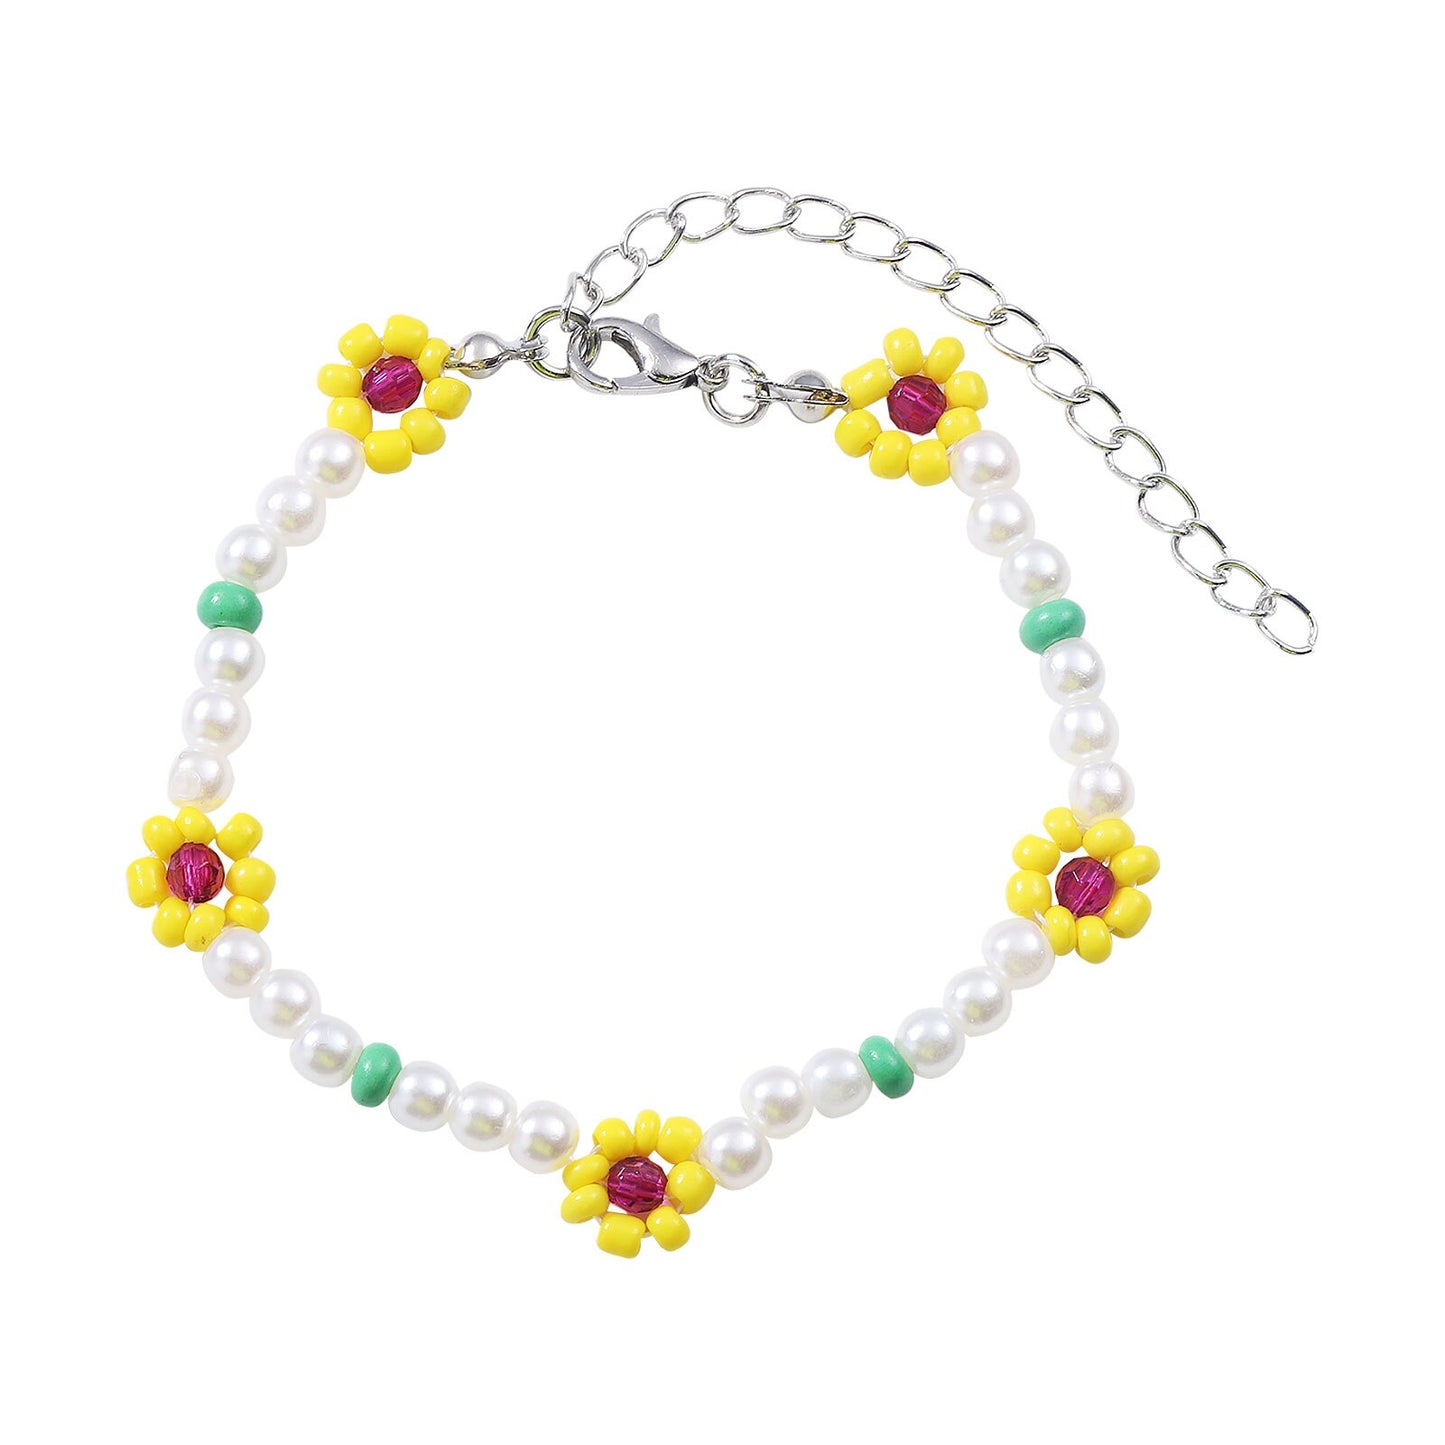 Dvacaman Boho Handmade Sunflower Beaded Necklace For Women Fashion White Imitation Pearl Choker Necklace INS Jewelry Accessories